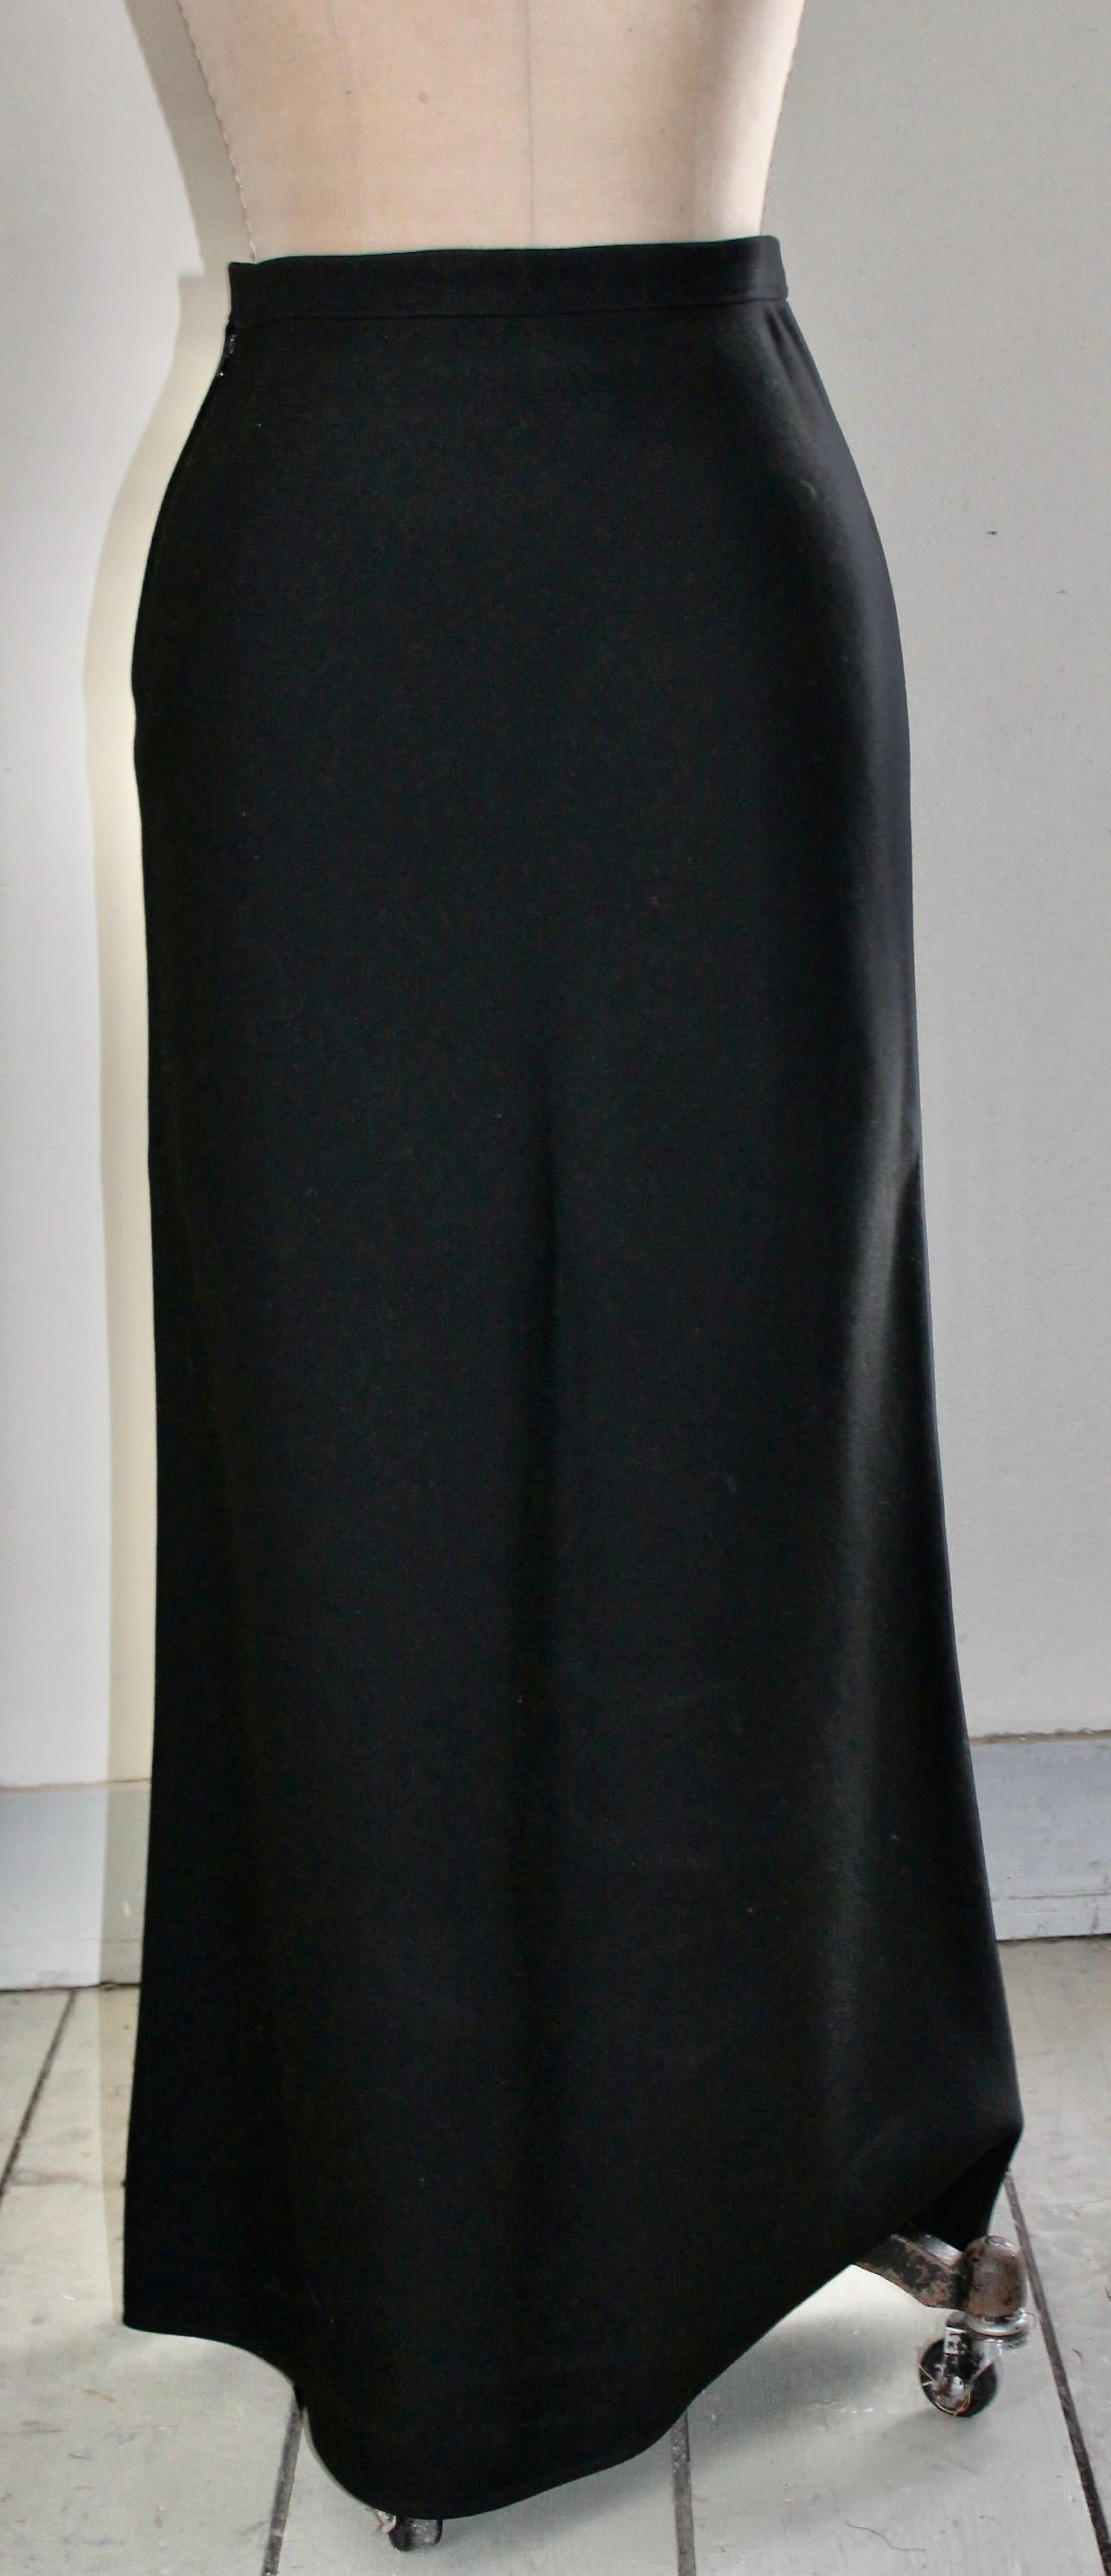 Long black wool fully lined skirt. Retailed at Bonwit Teller.